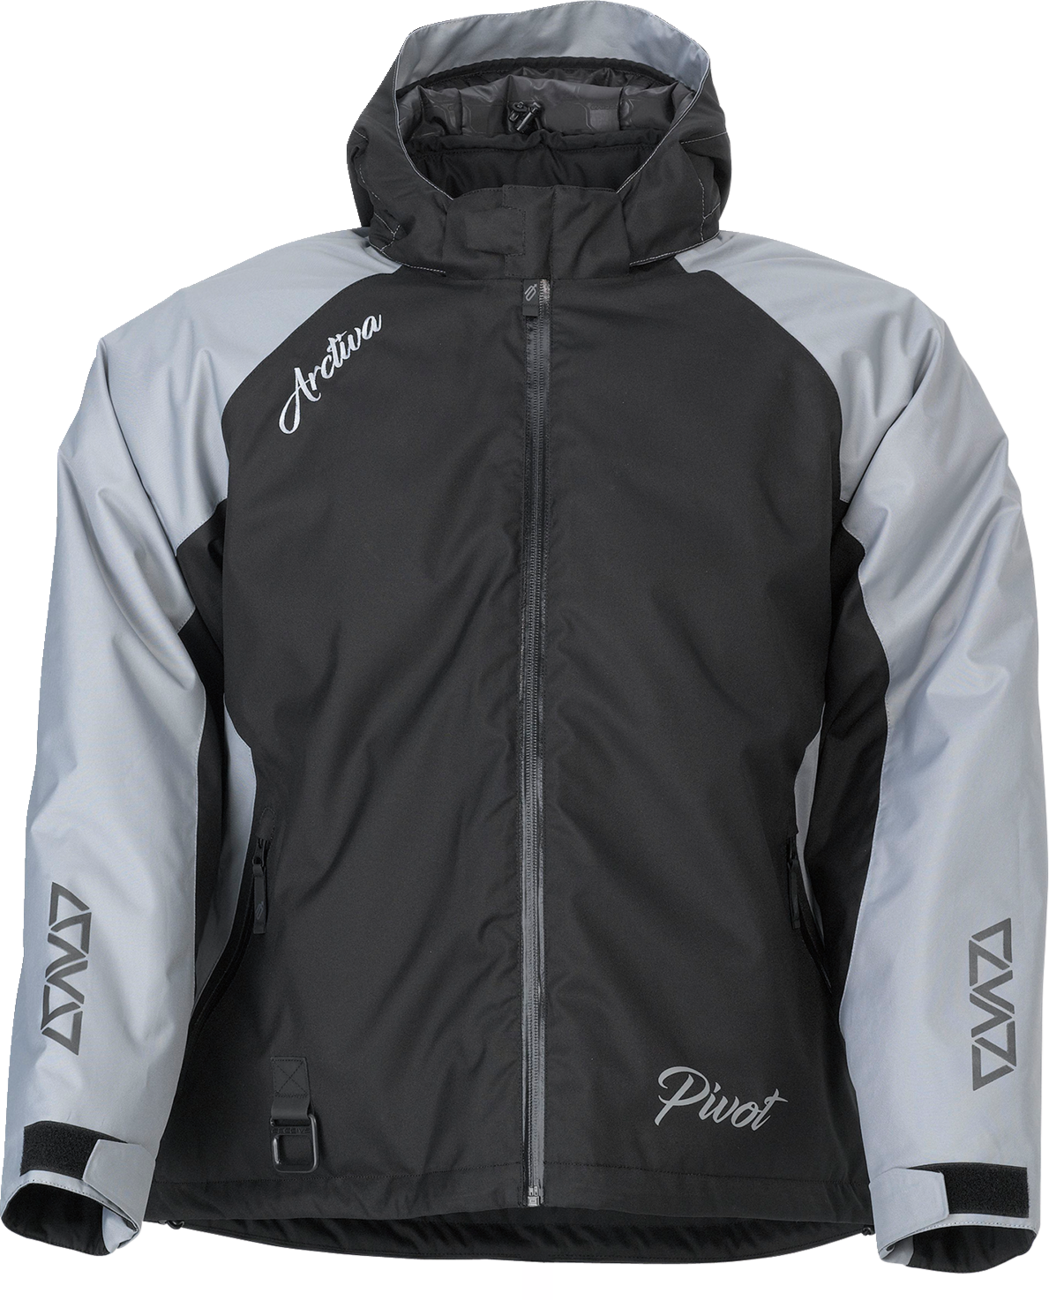 ARCTIVA Women's Pivot 5 Hooded Jacket - Gray - Large 3121-0805